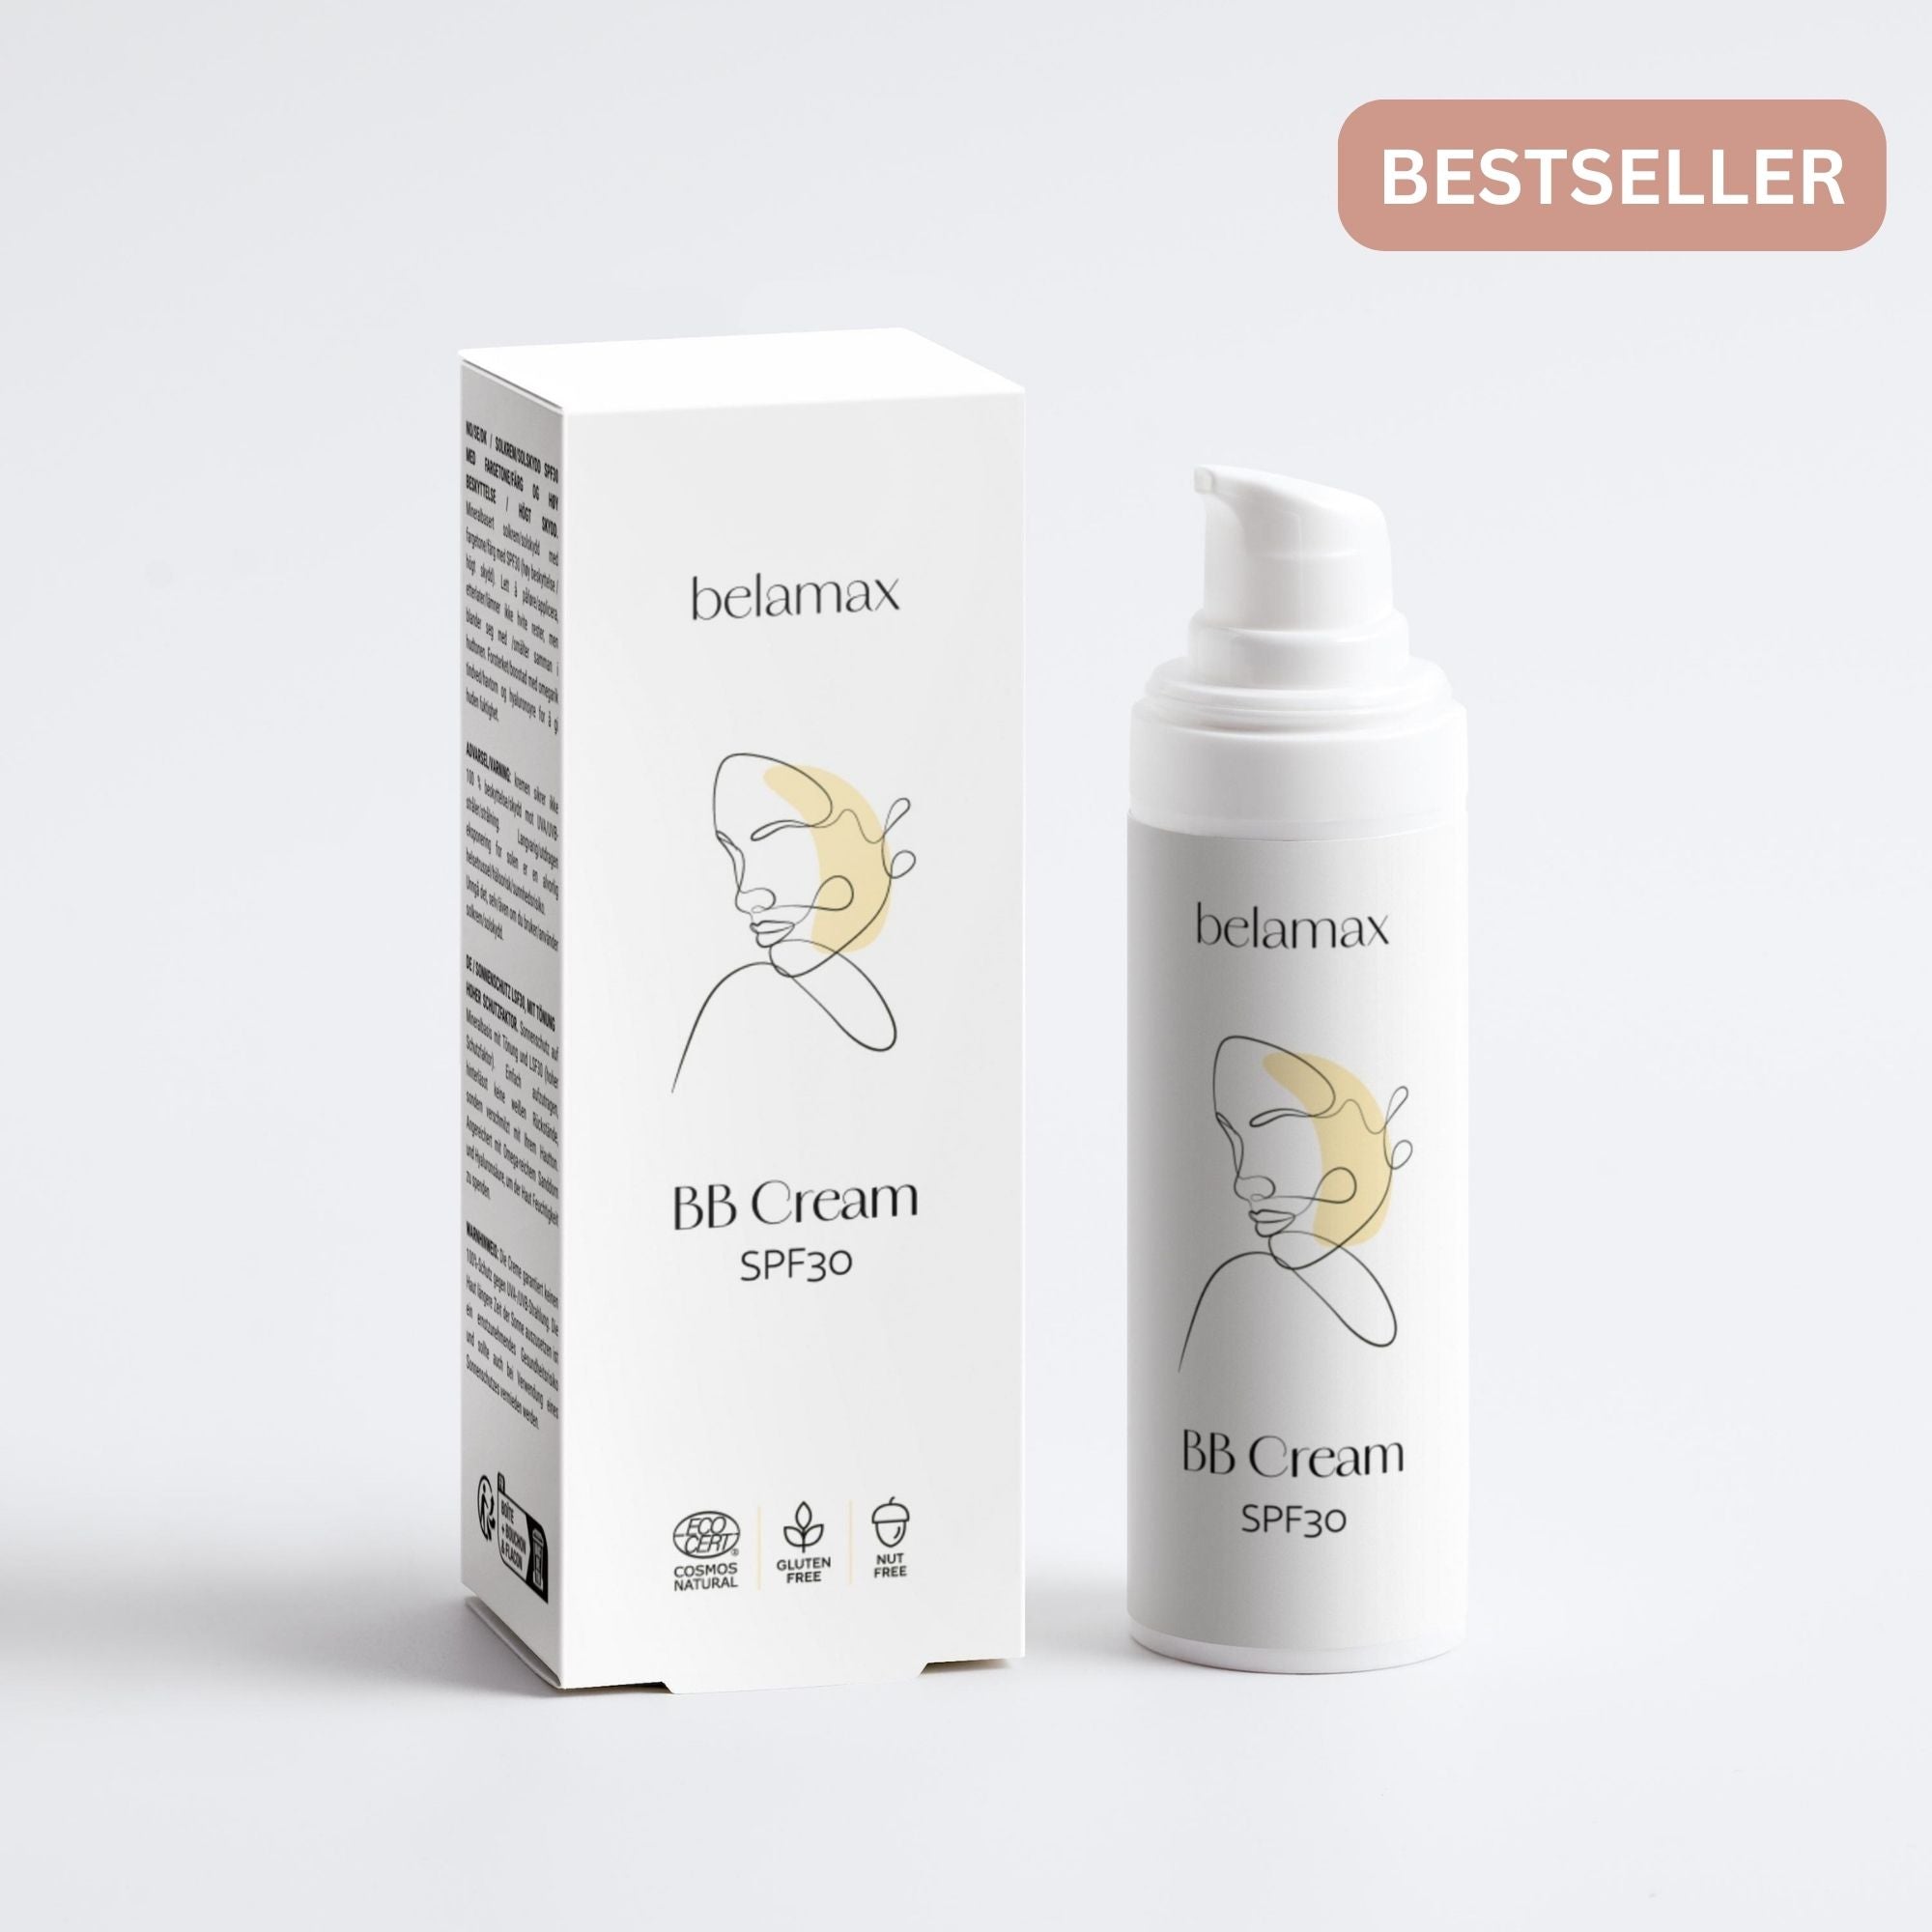 Belamax BB Cream SPF30 (30ml)